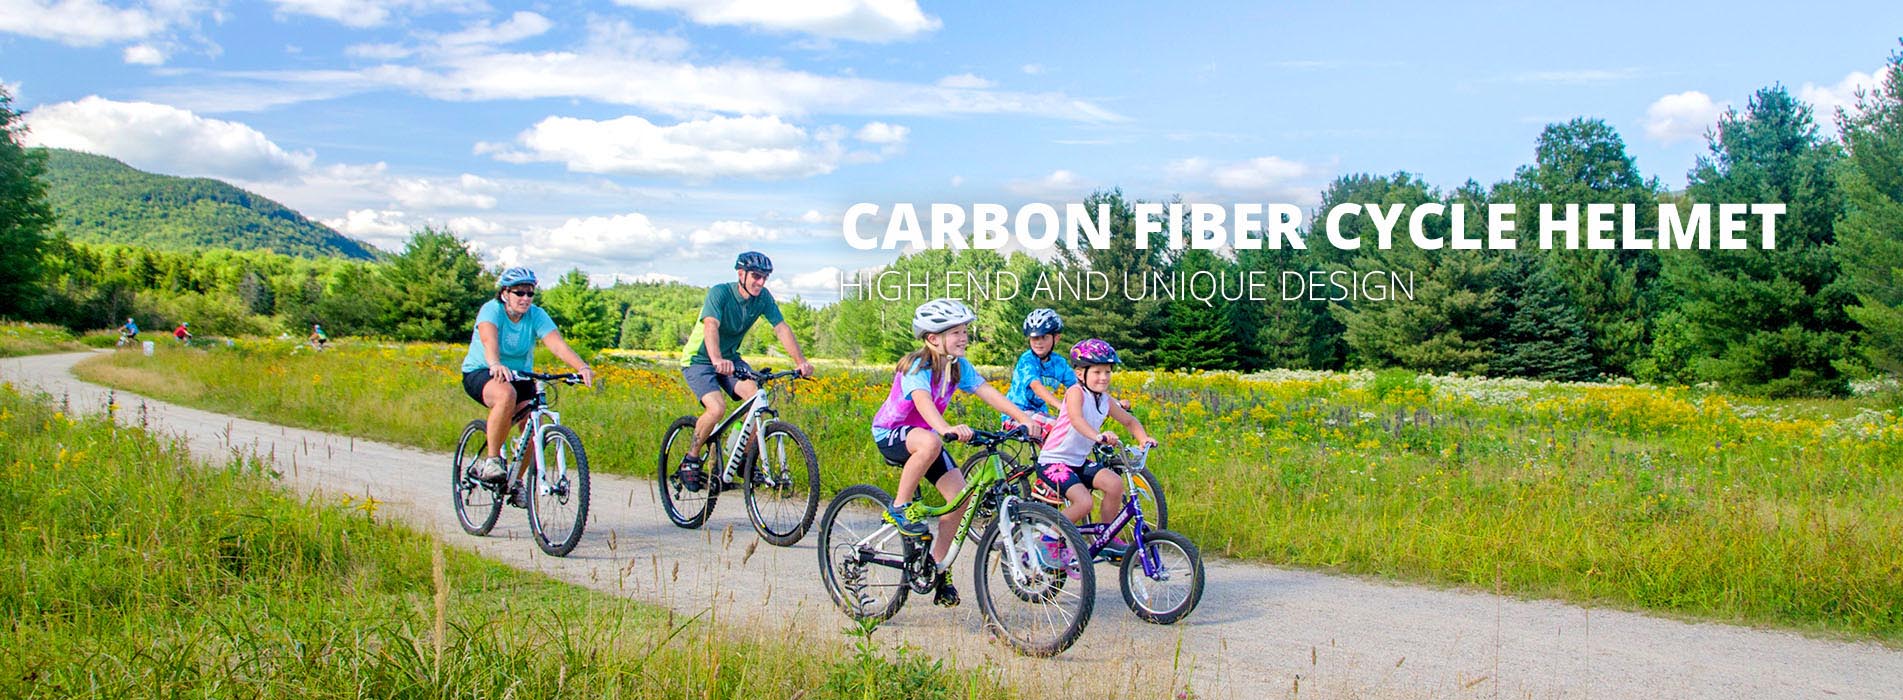 carbon fiber cycle helmet banner